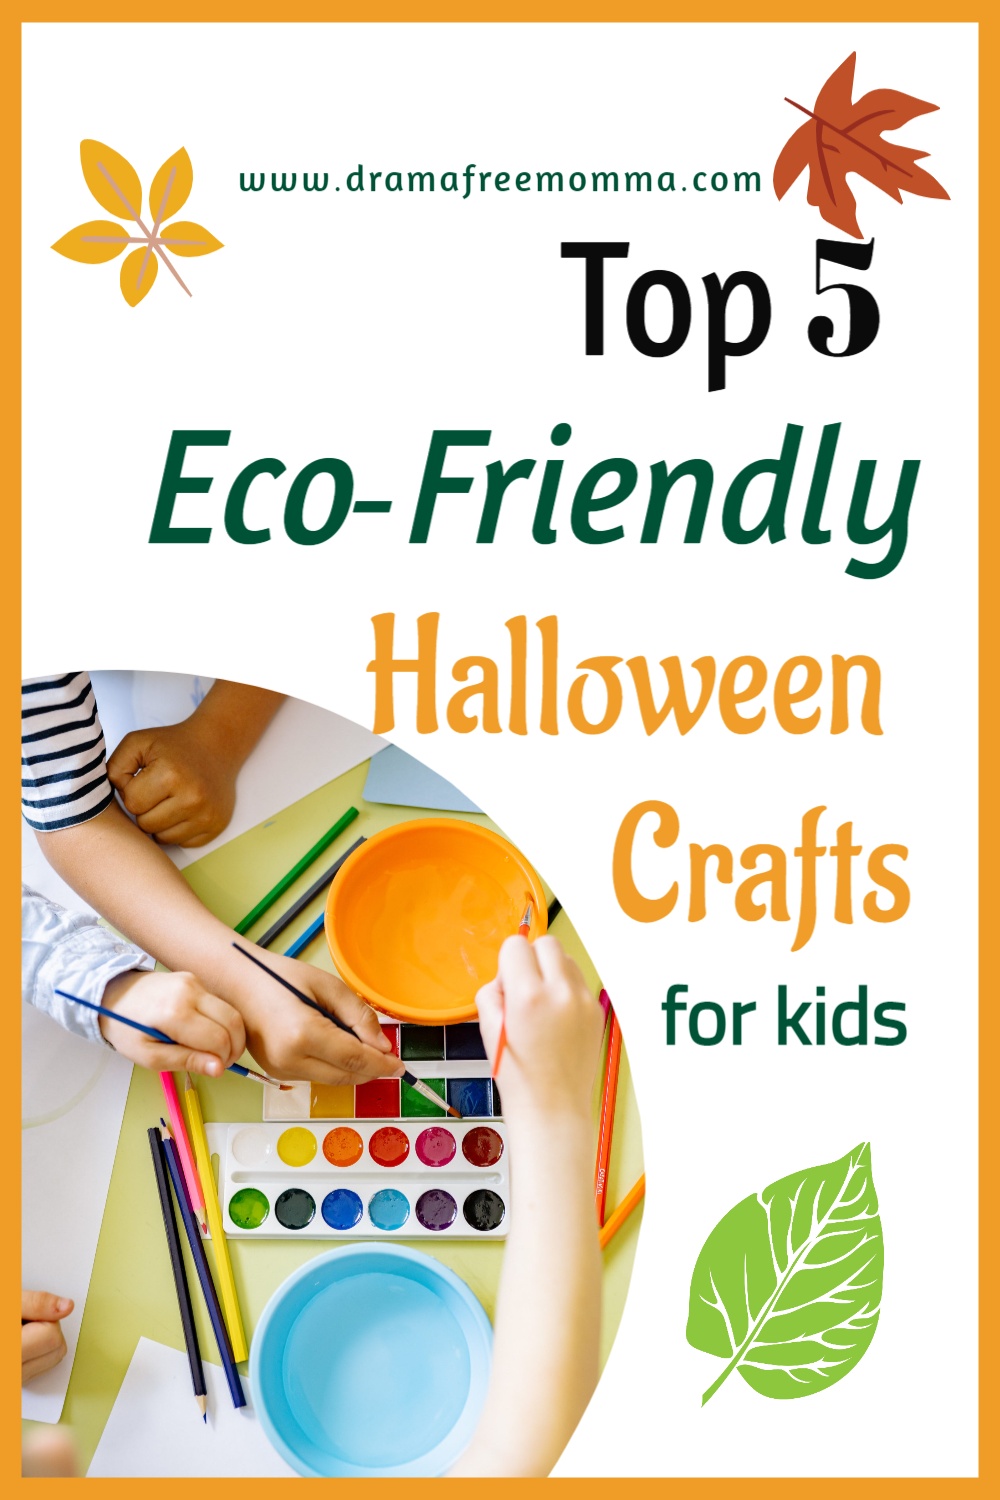 halloween arts and crafts kits, halloween craft kits, halloween craft kits for adults, halloween craft sets, top halloween craft kits 2021